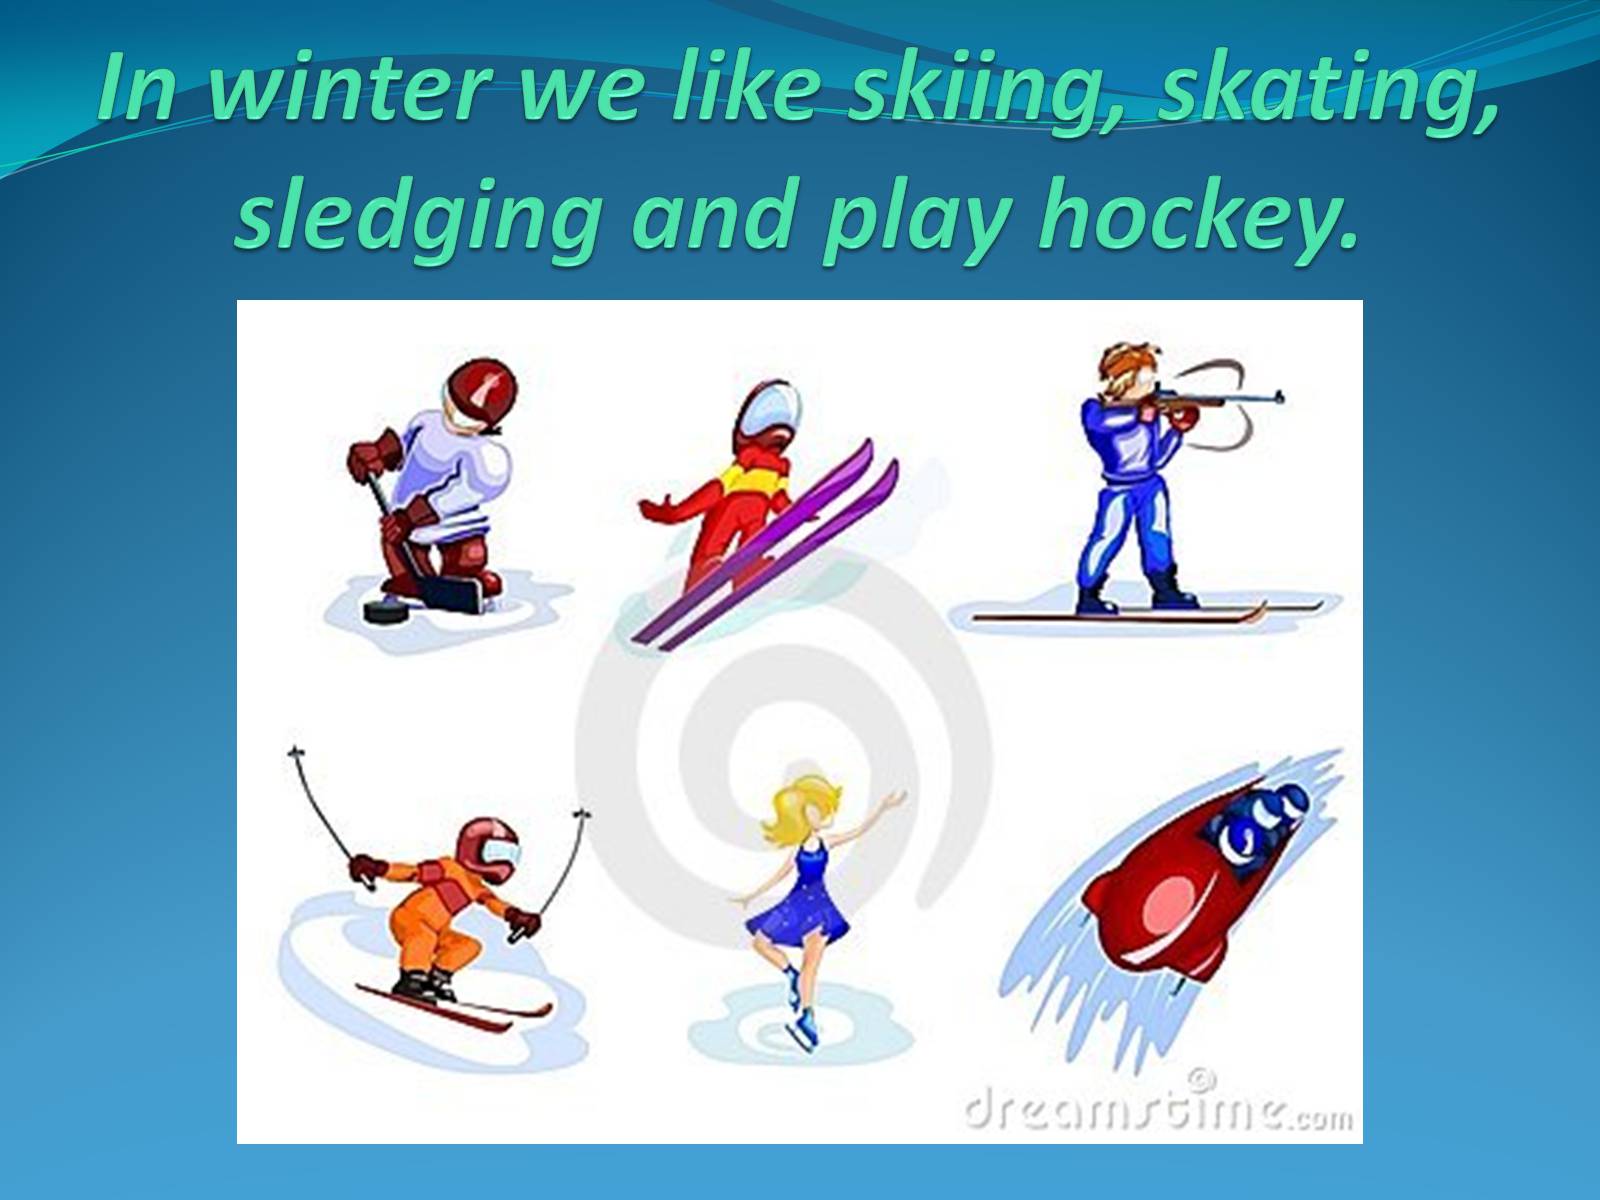 Картинки на тему спорт для презентации. Презентація на тему спорт. Sledging, Skiing, Skating. Презентация про спорт хоккей с мячом. Немецкая тема спорт